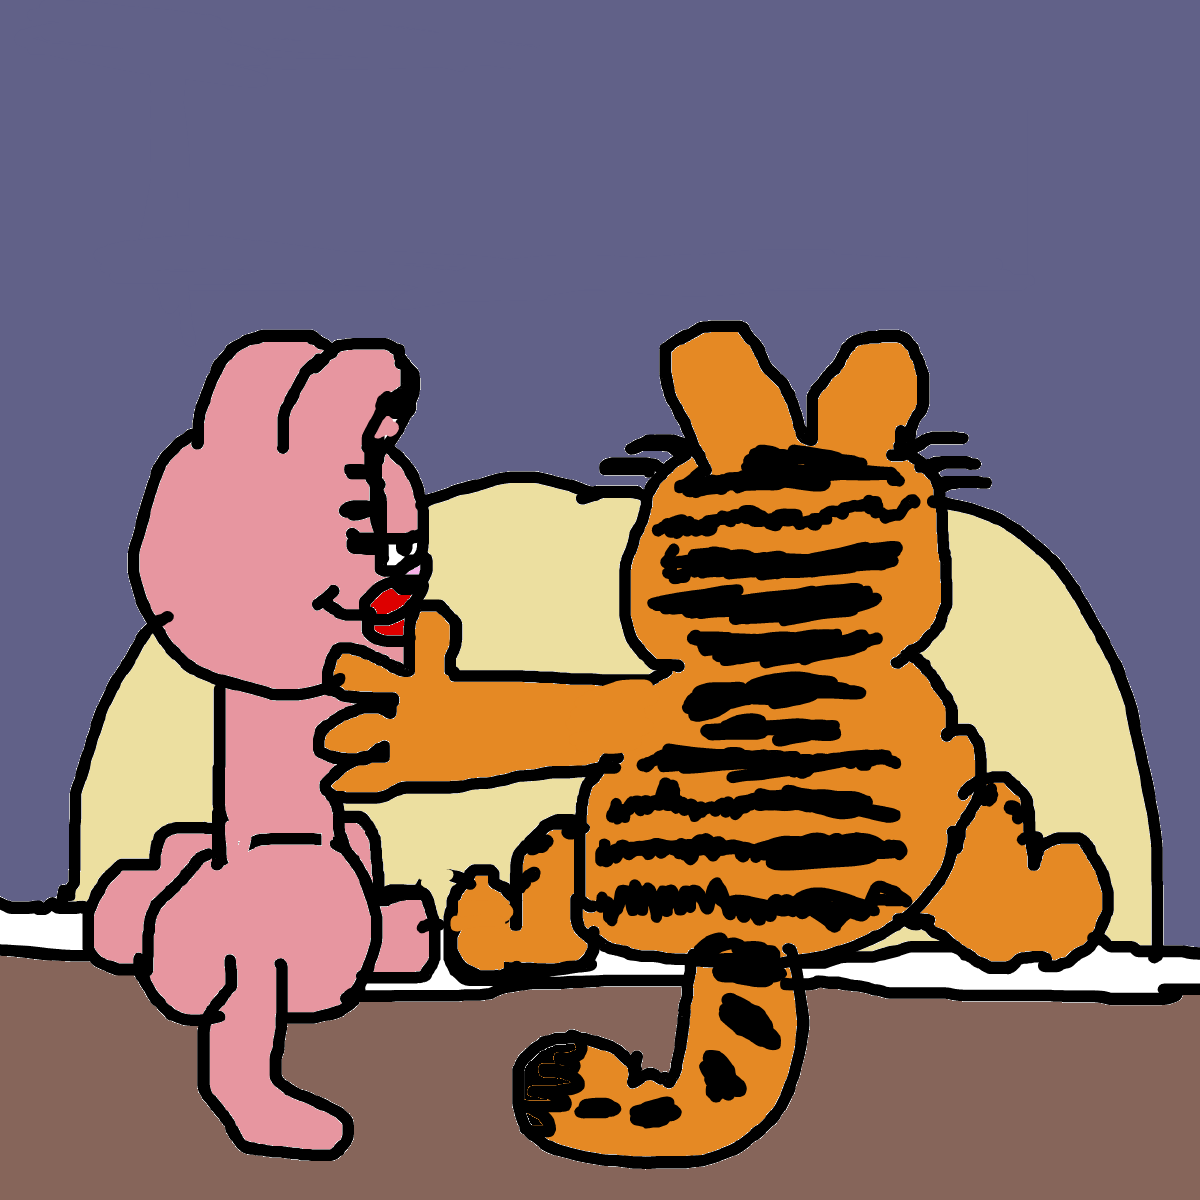 Garfield and Arlene by Dariusman143